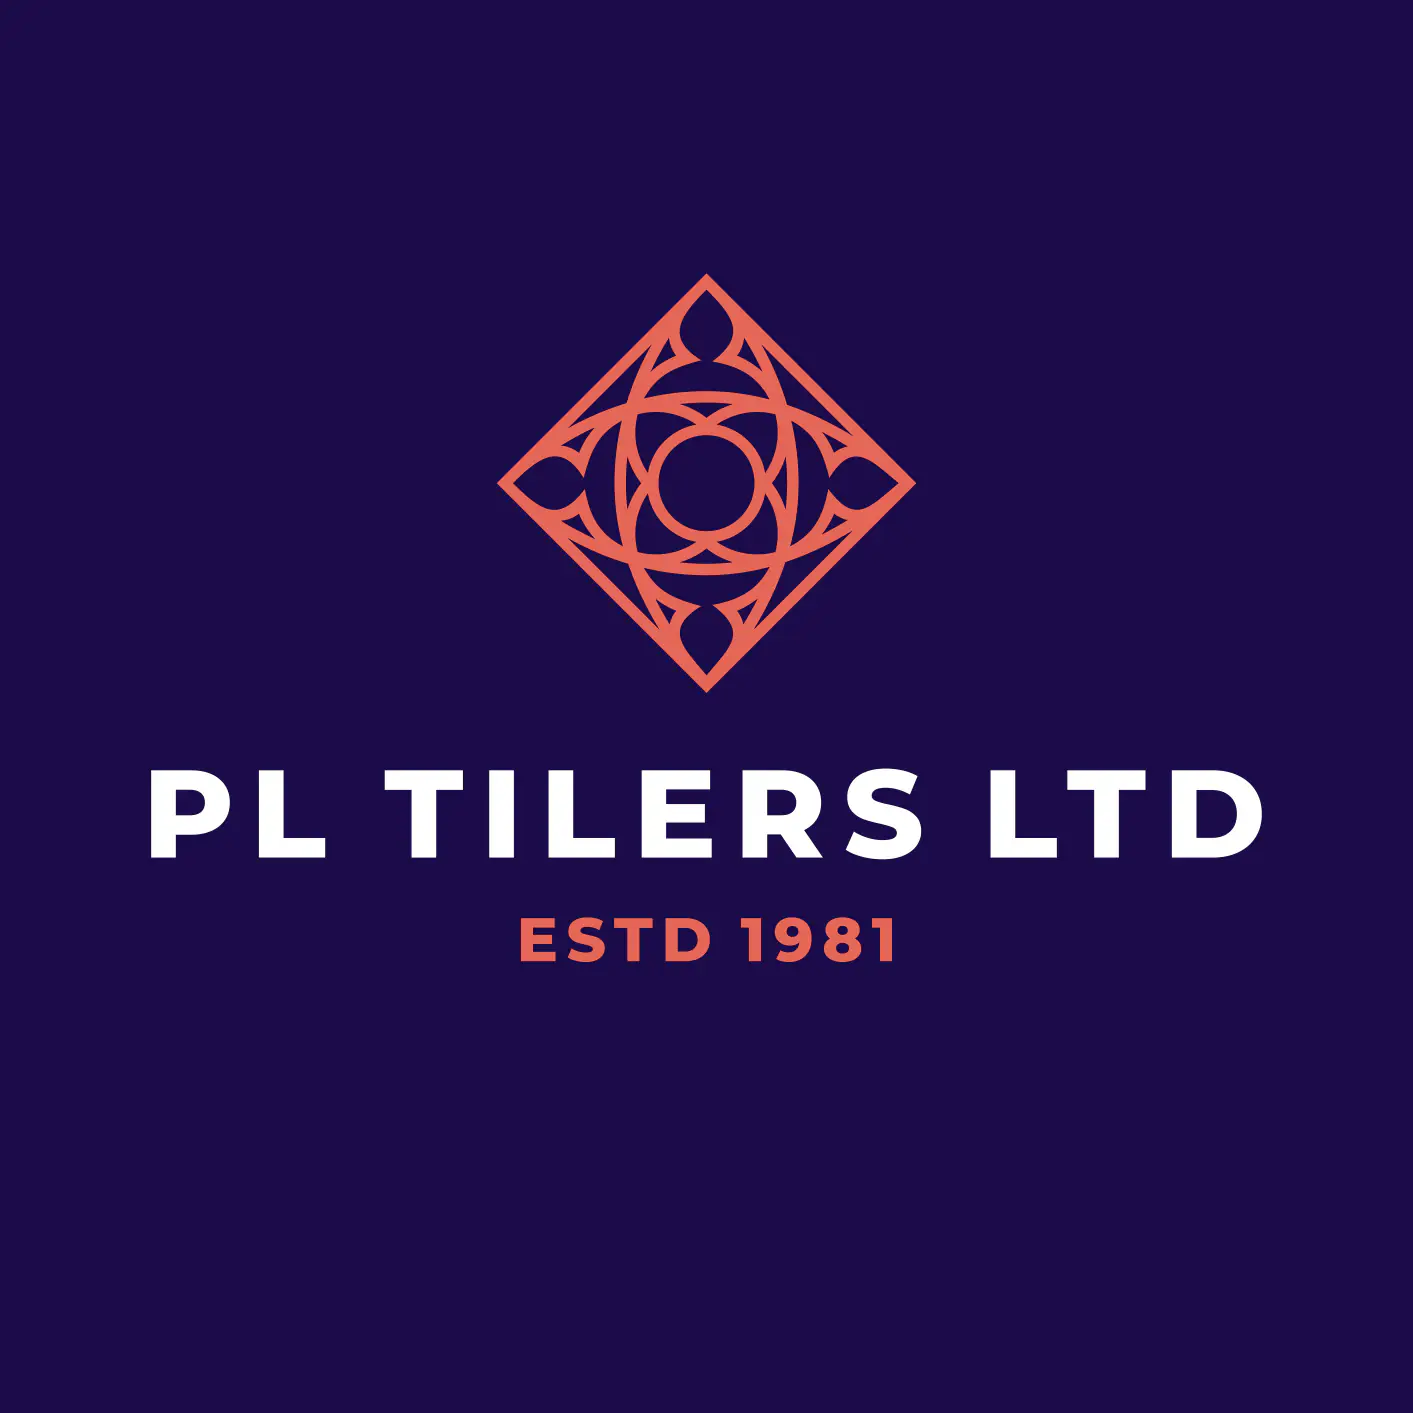 PL Tilers Ltd